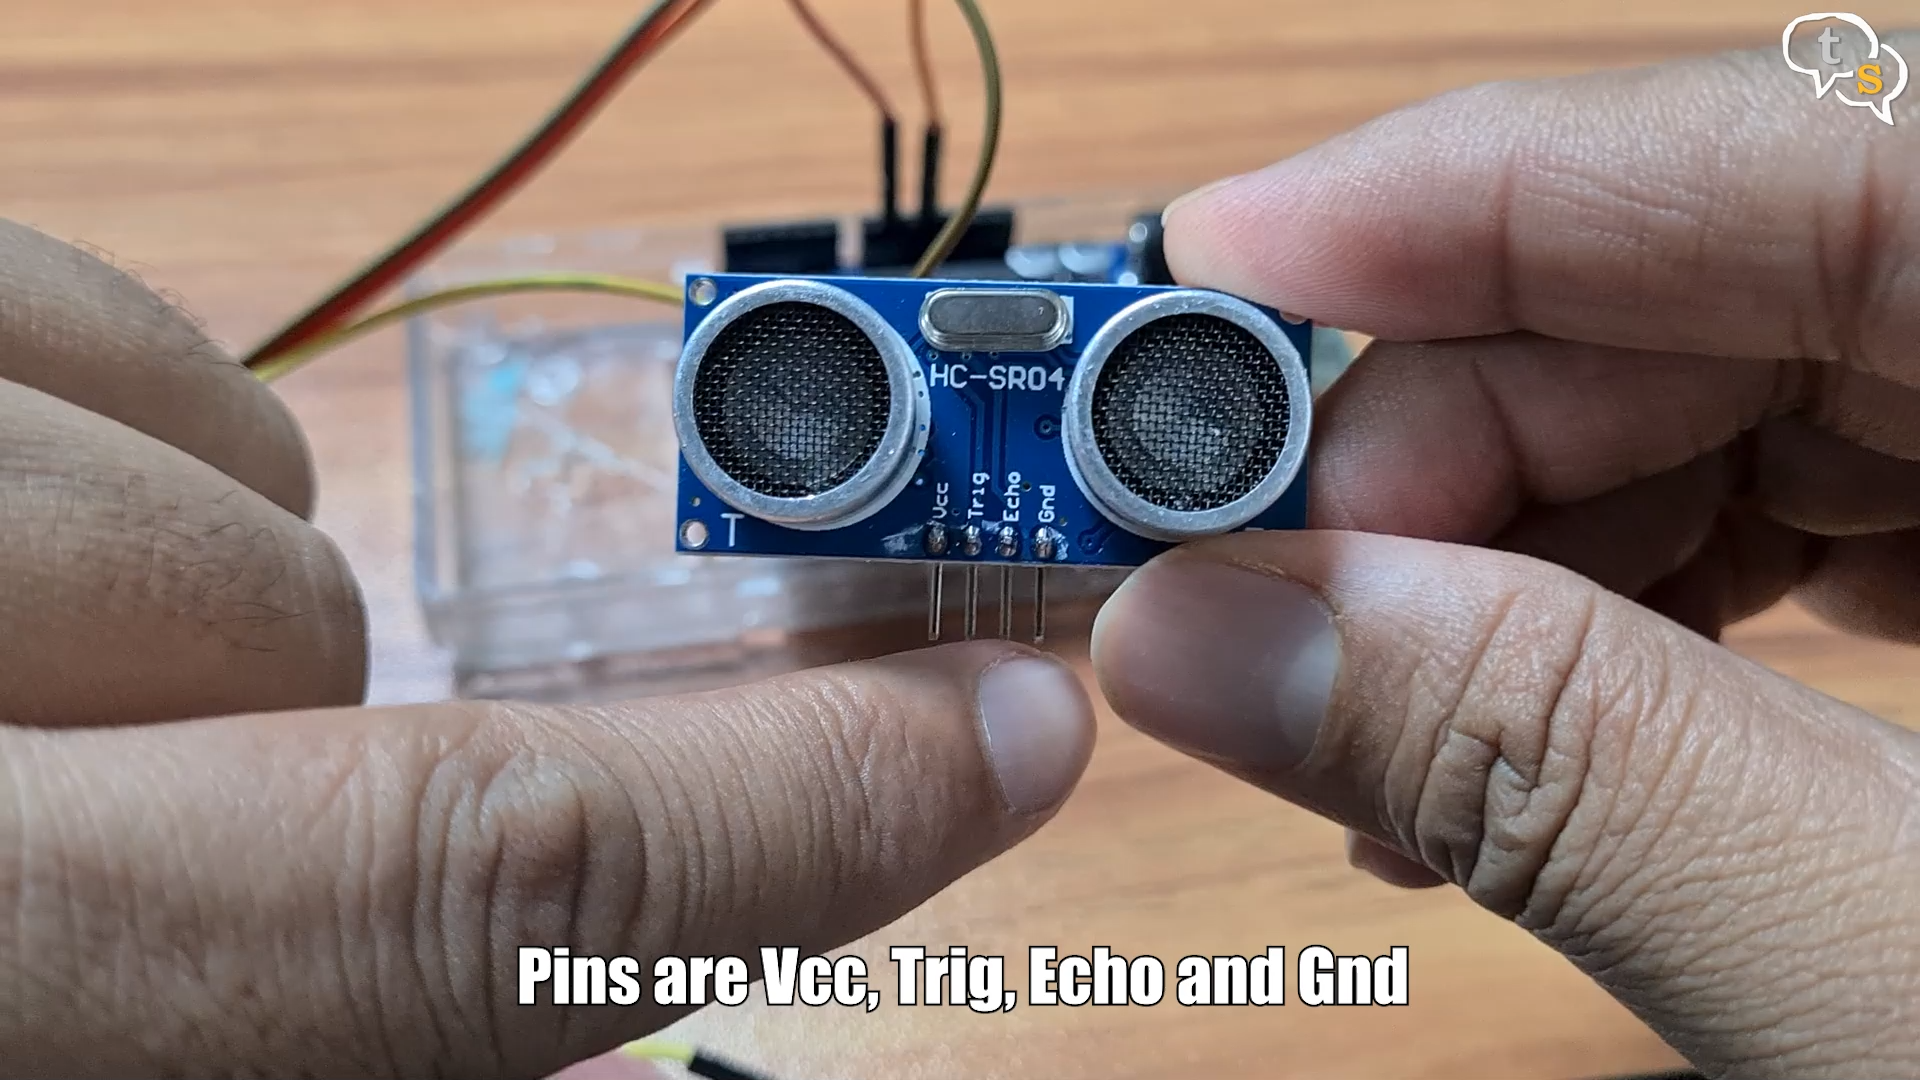 HC-SR04 ultrasonic sensor Trig and Echo pins